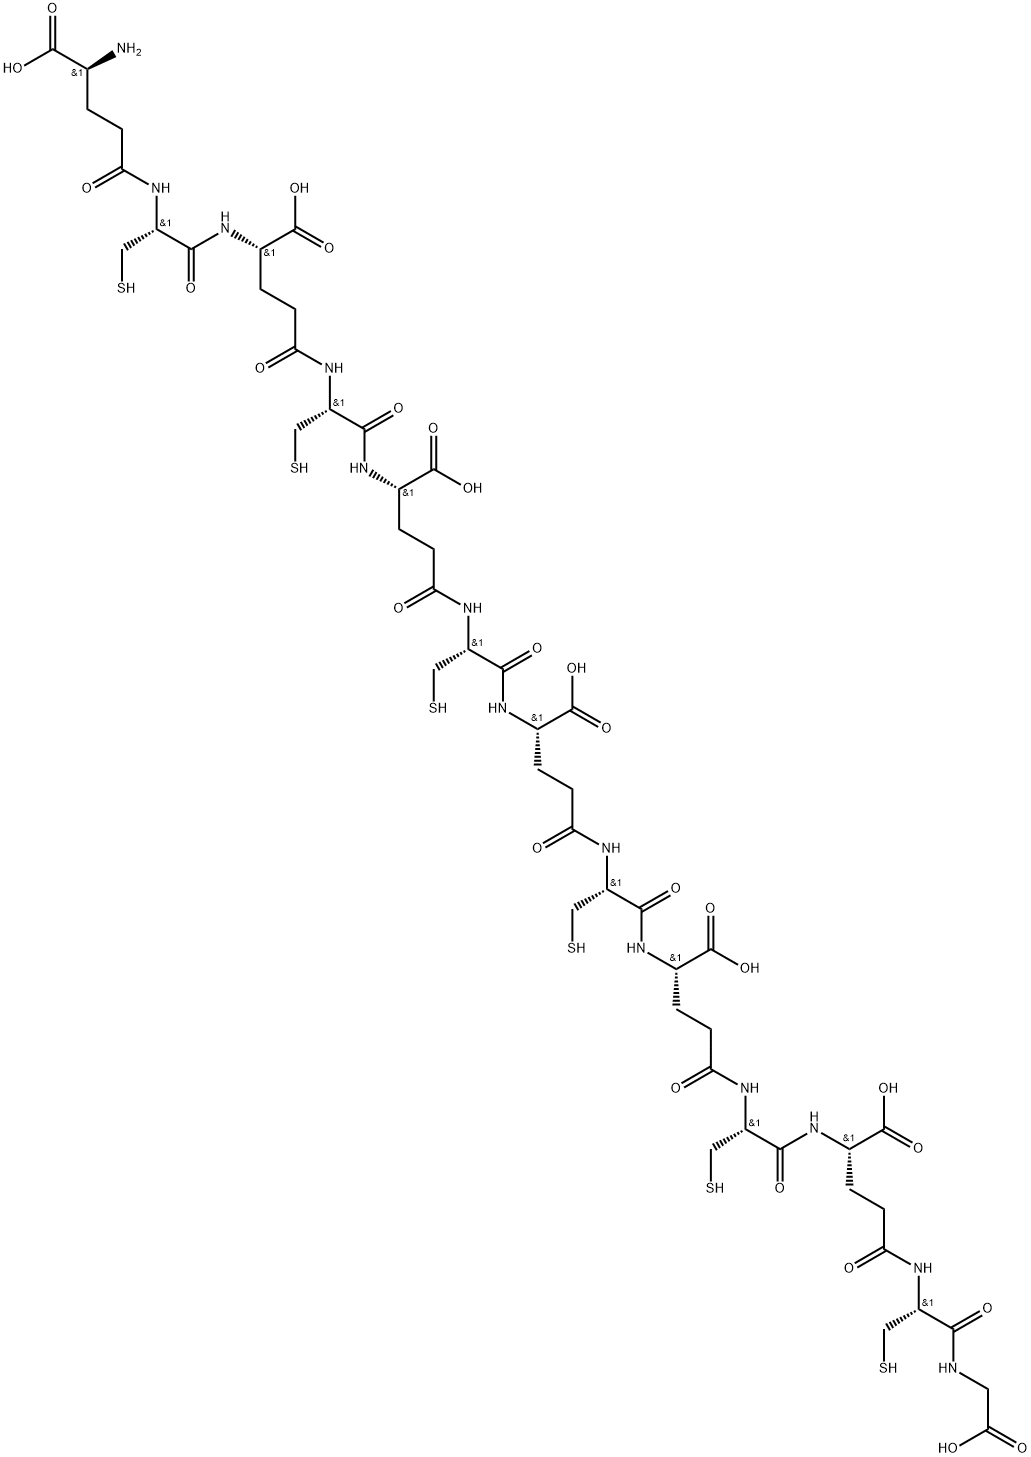 Glycine, L-γ-glutamyl-L-cysteinyl-L-γ-glutamyl-L-cysteinyl-L-γ-glutamyl-L-cysteinyl-L-γ-glutamyl-L-cysteinyl-L-γ-glutamyl-L-cysteinyl-L-γ-glutamyl-L-cysteinyl- Struktur